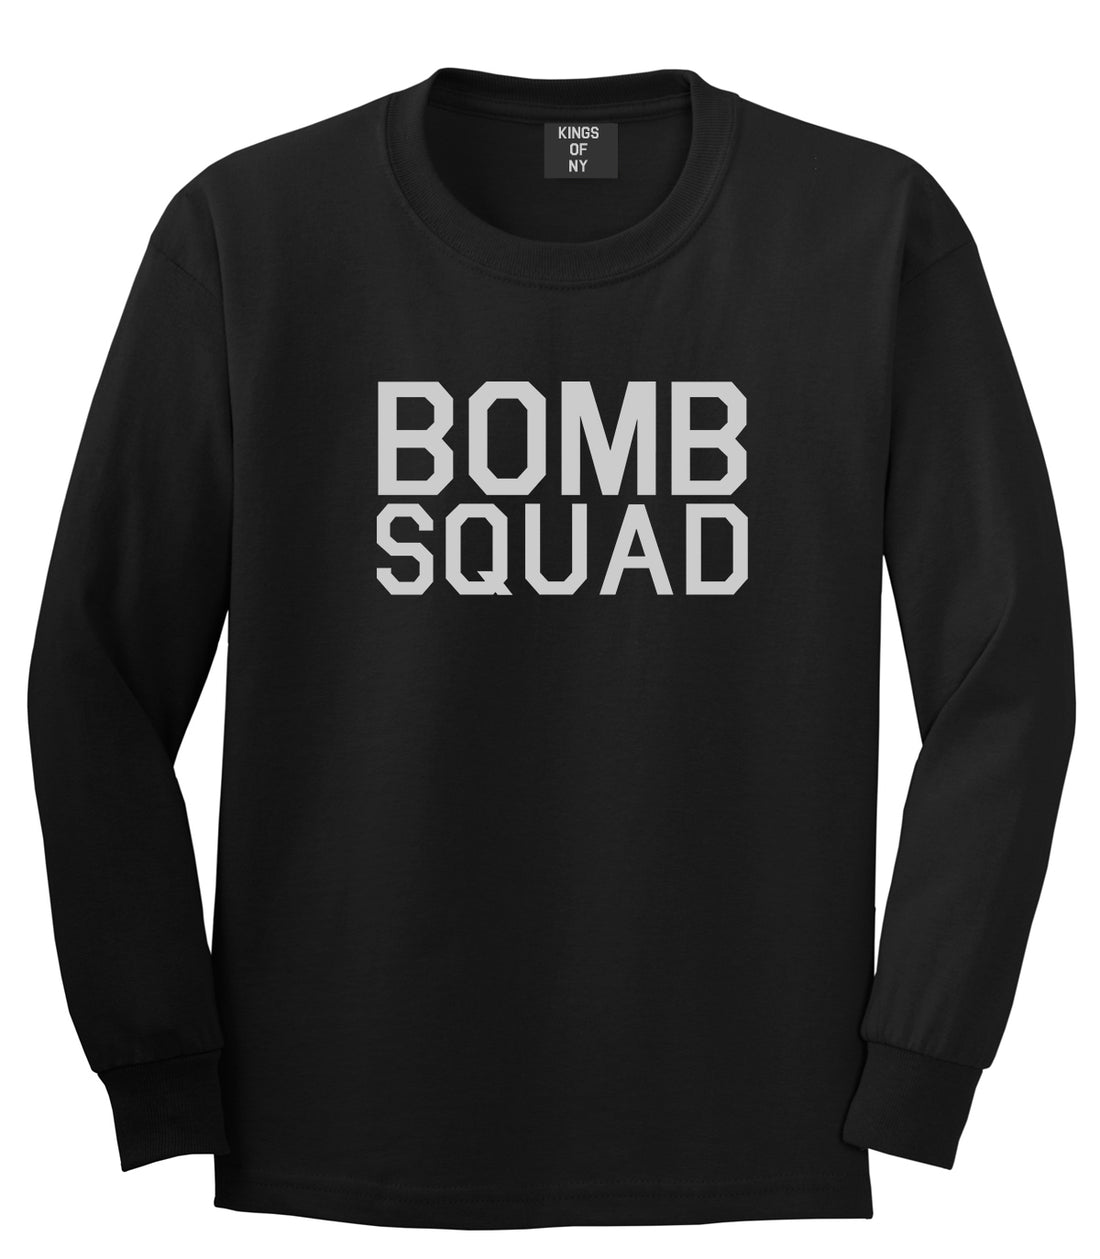 Bomb Squad Black Long Sleeve T-Shirt by Kings Of NY